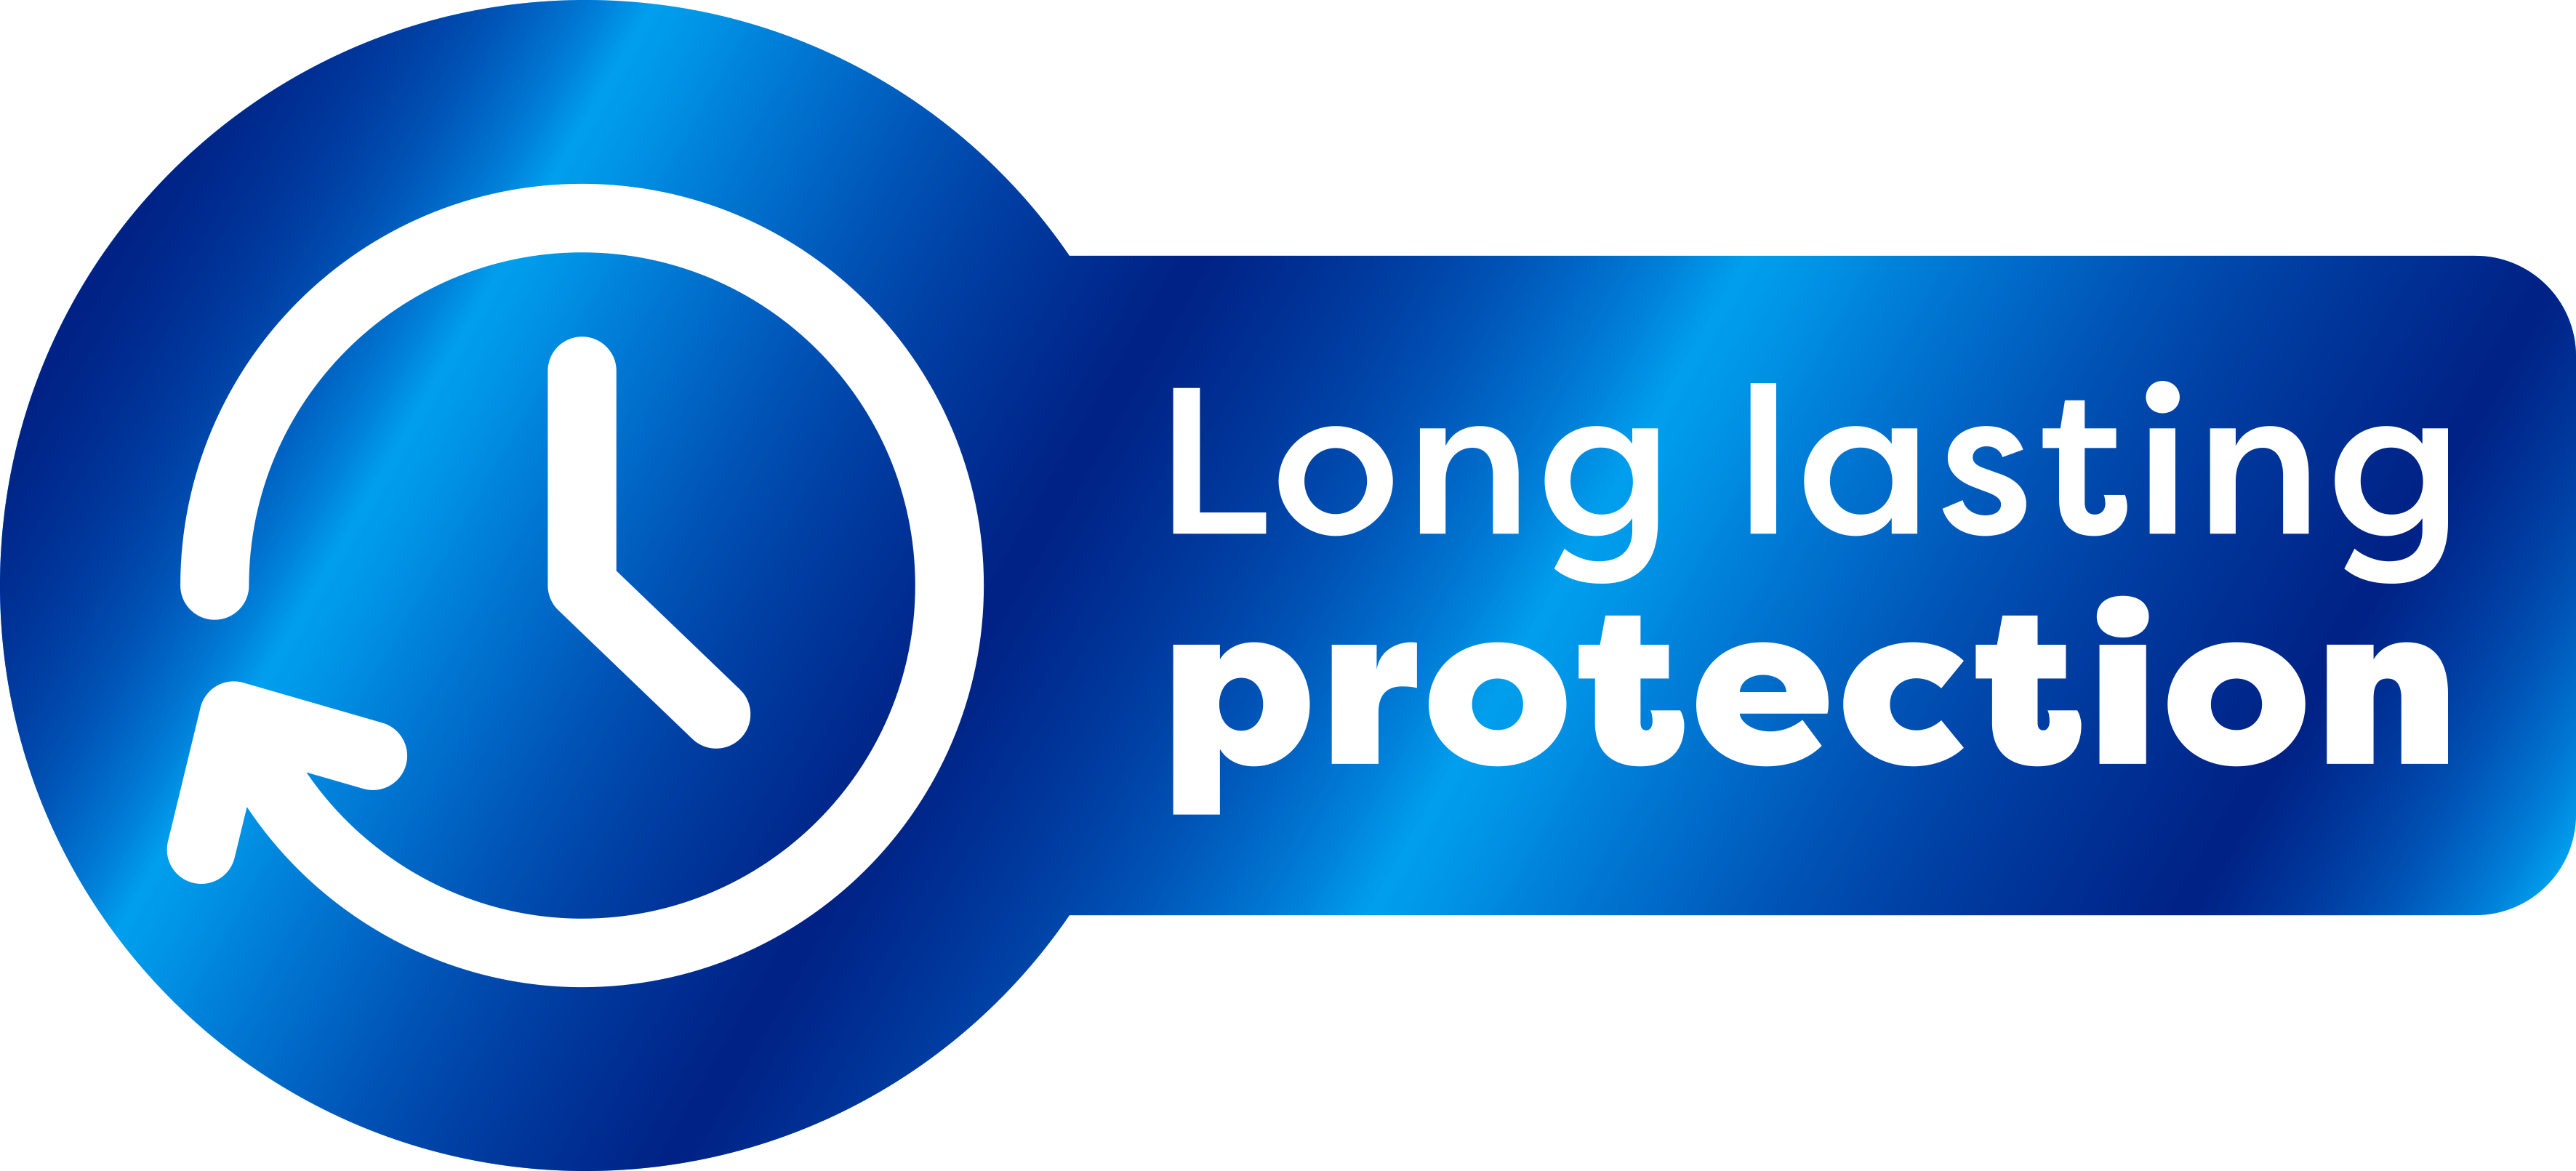 Long lasting protection